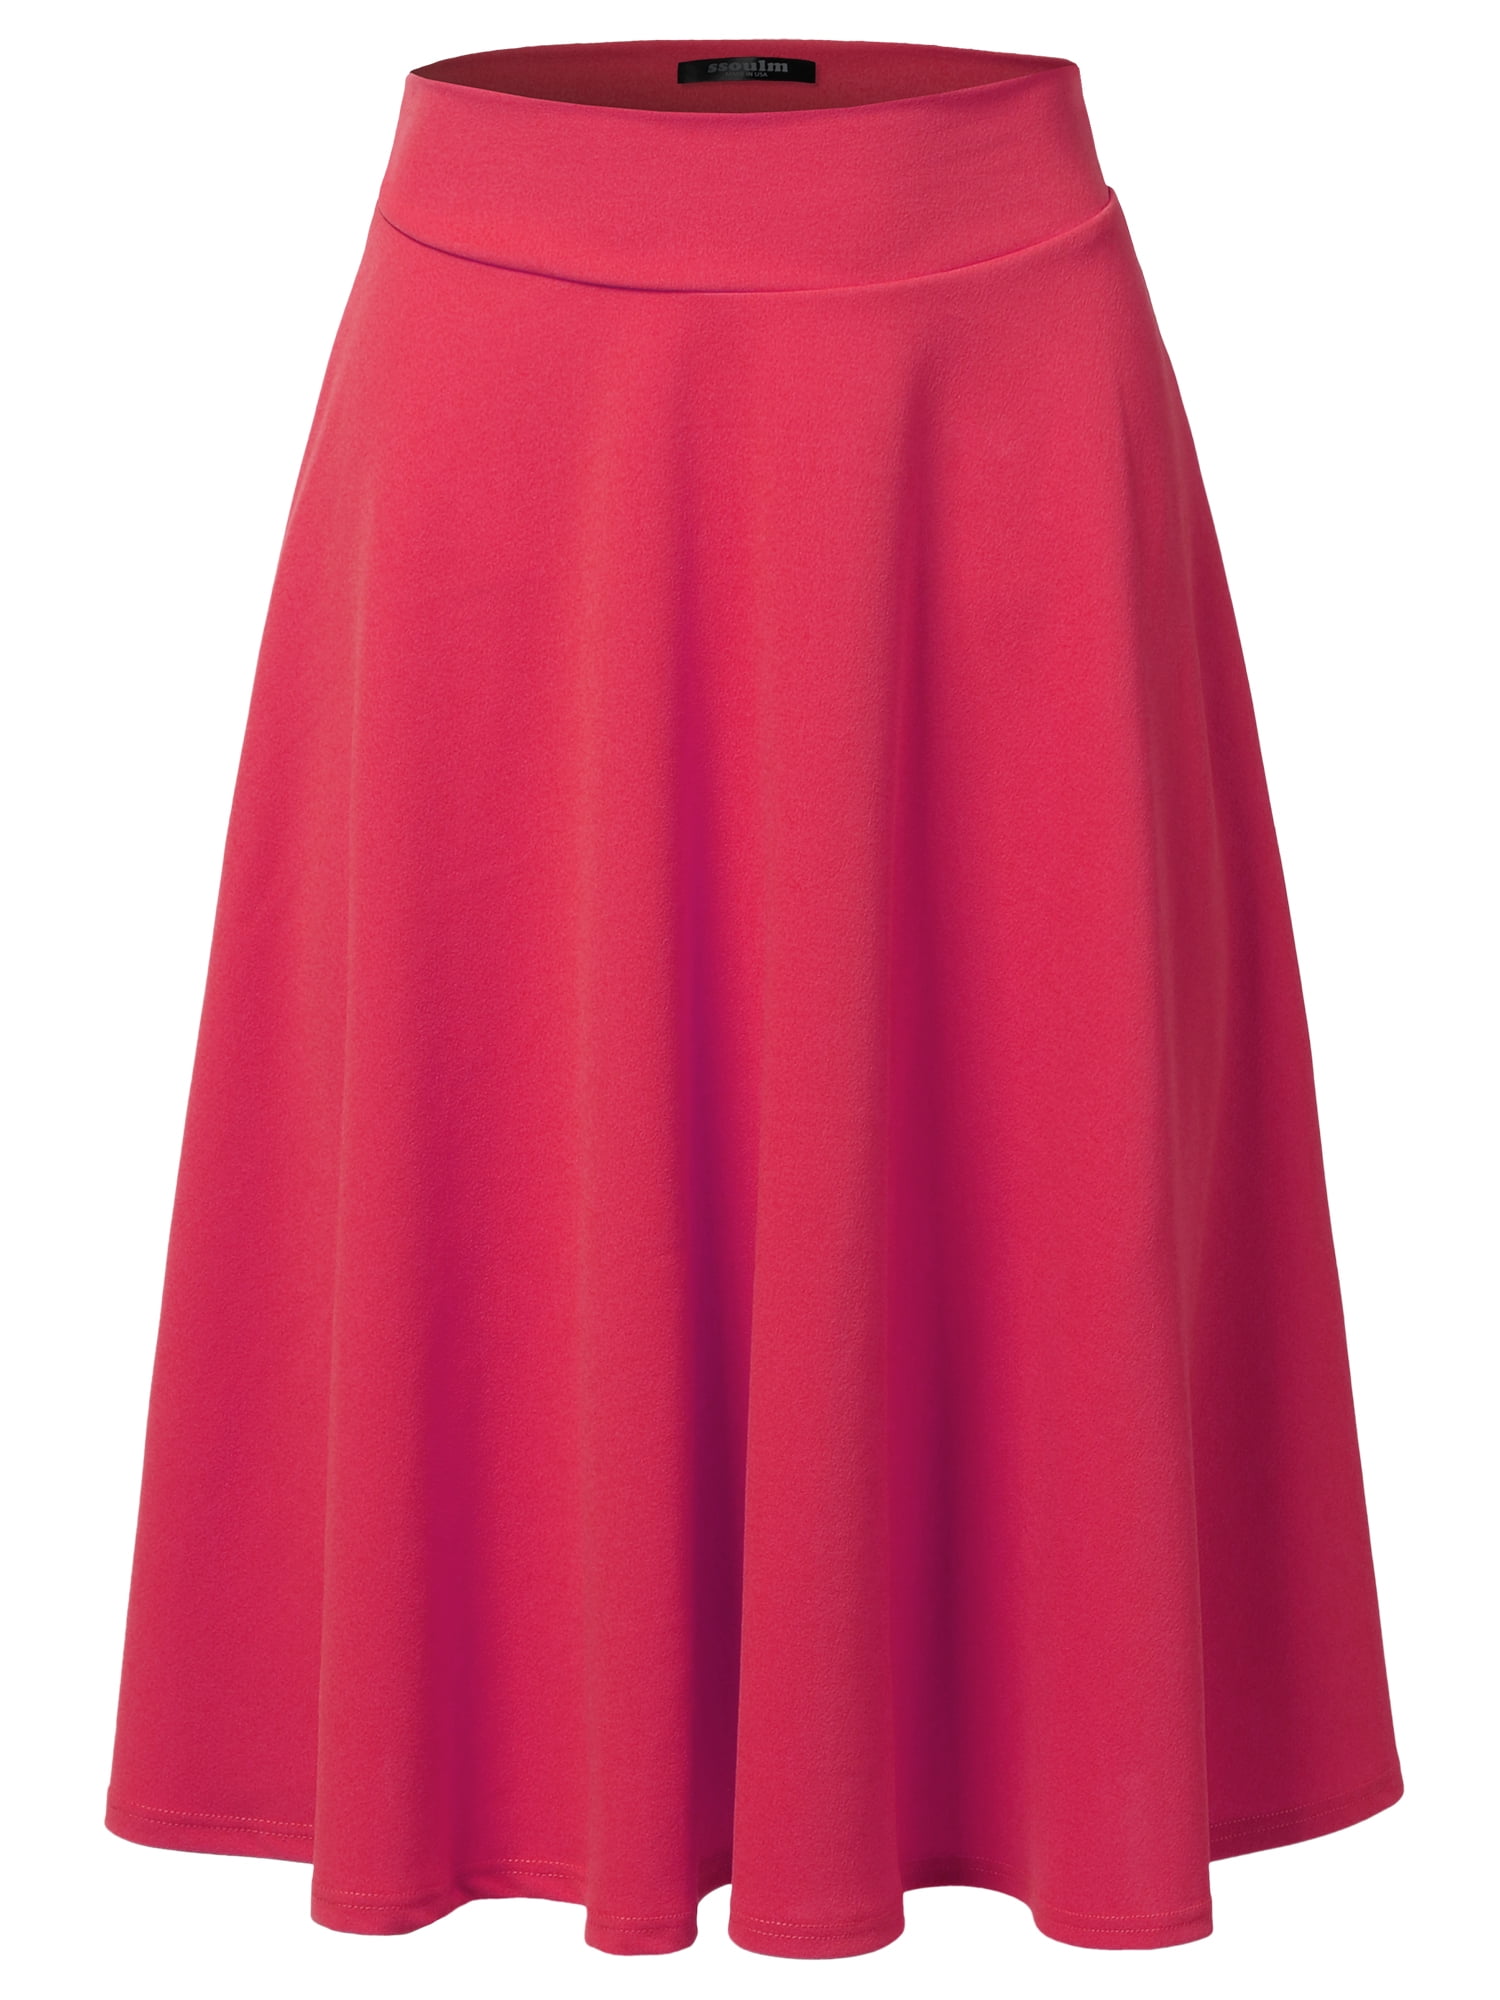 SSOULM Women's High Waist Flare A-Line Midi Skirt with Plus Size -  Walmart.com